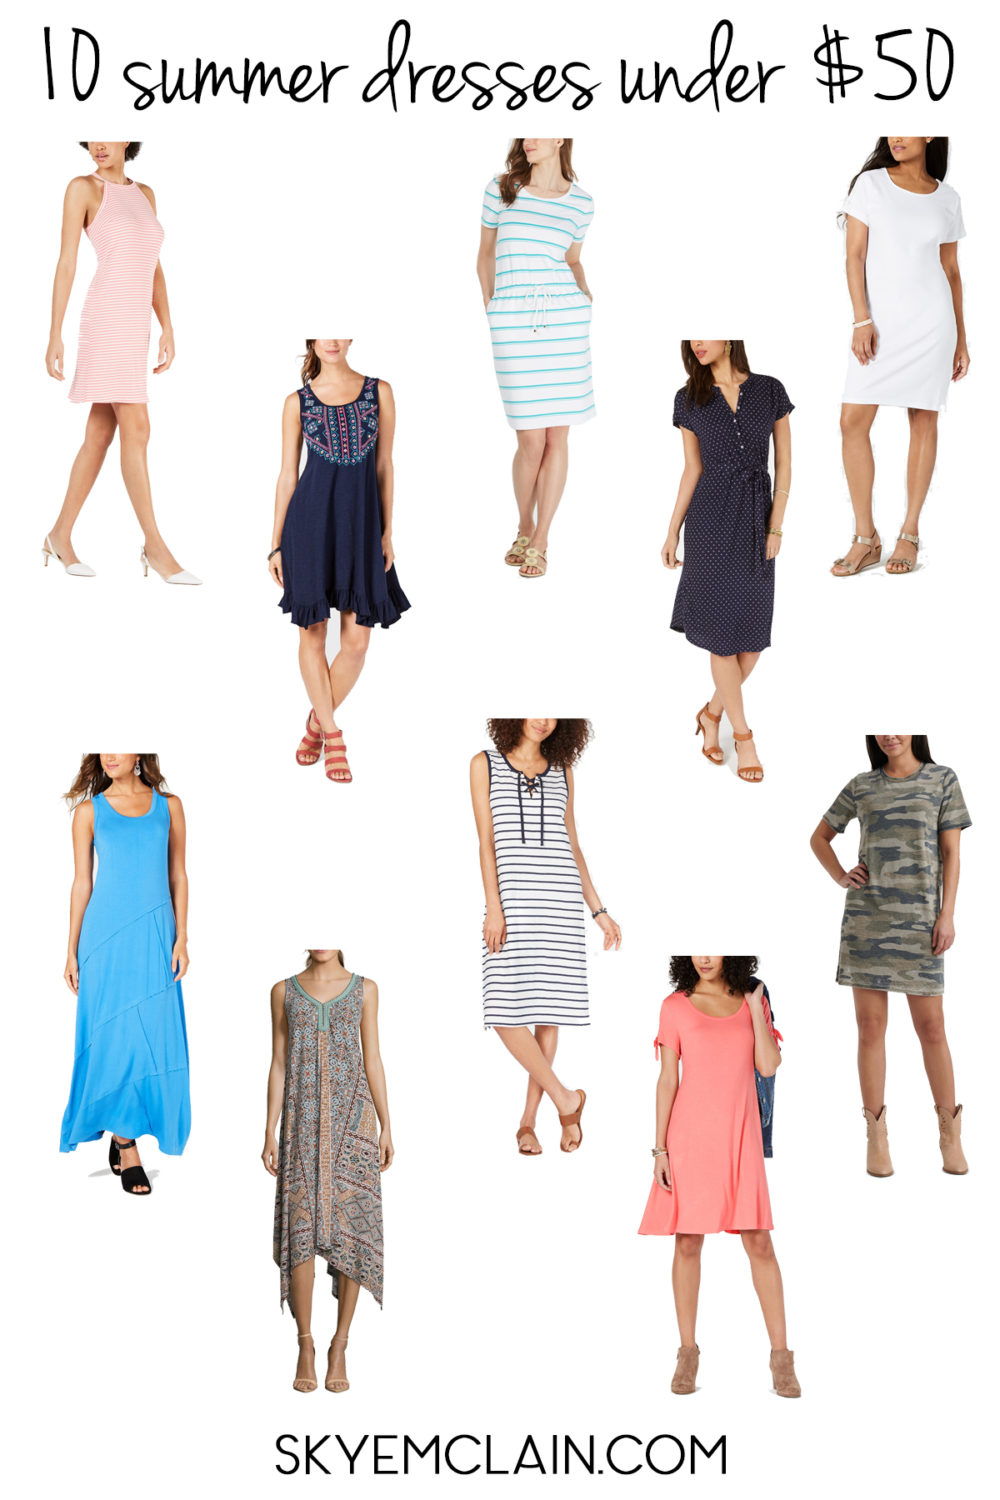 Ten Summer Dresses Under $50 | Skye McLain